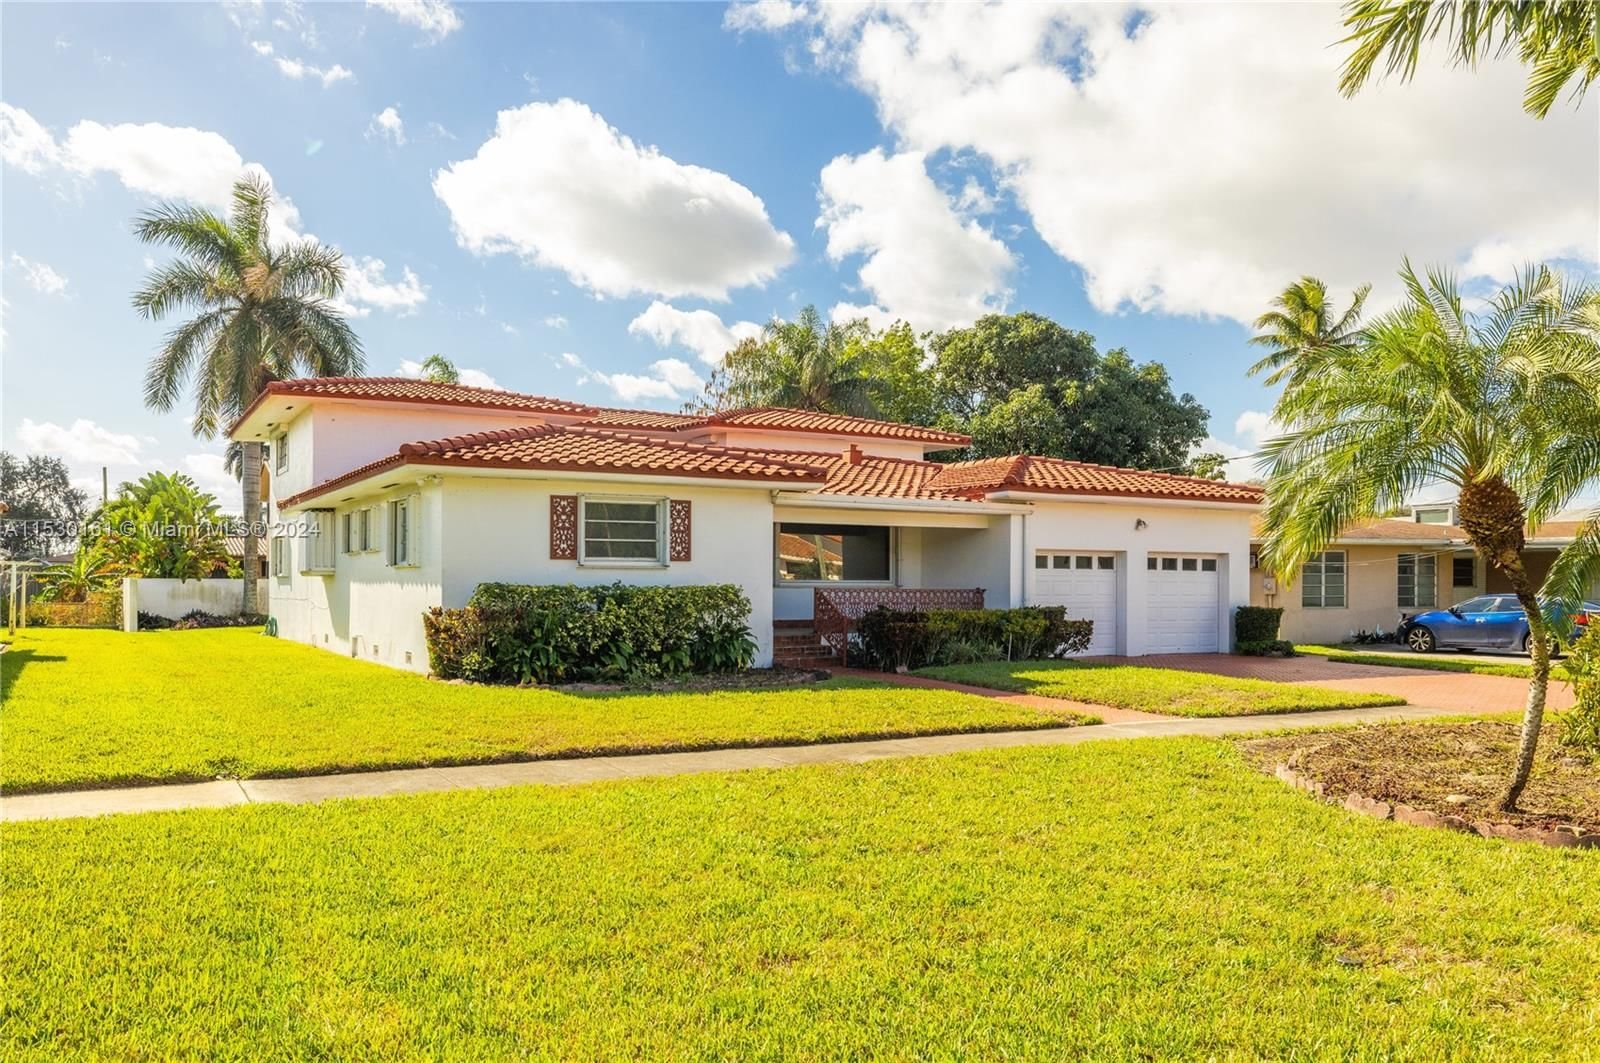 Real estate property located at 1160 87 St, Miami-Dade County, Near North Shore Hos, Miami, FL